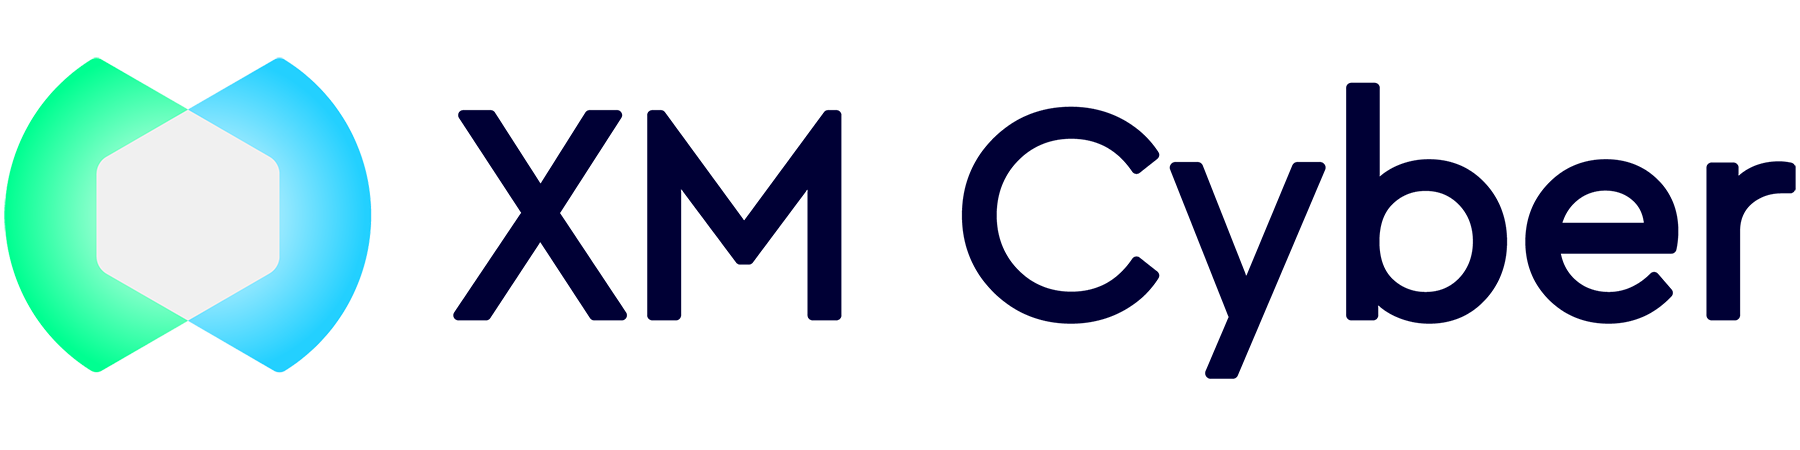 Mkto_XM_Cyber_Logo.png